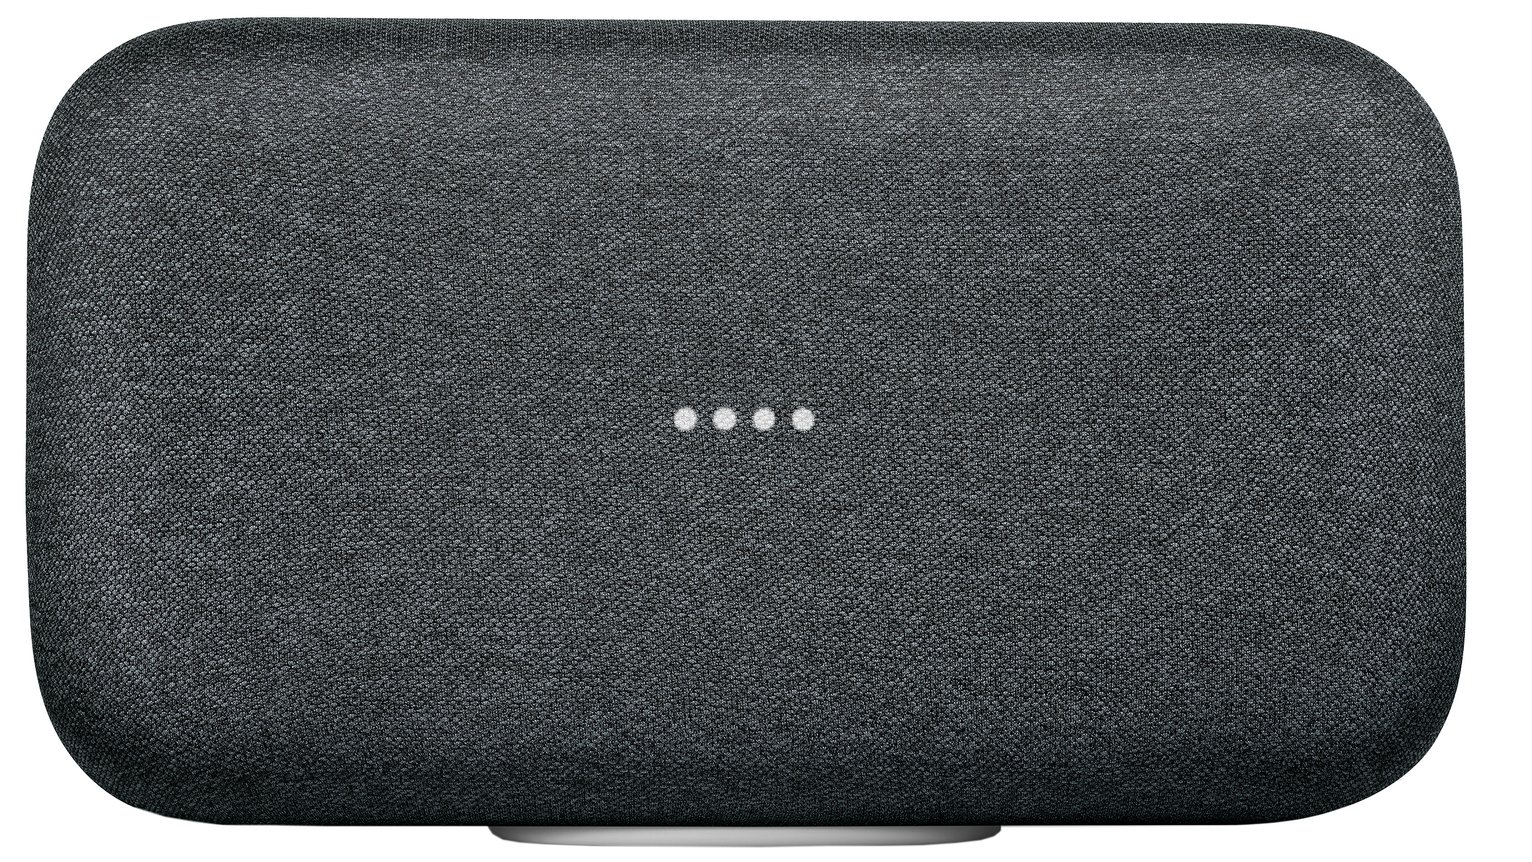 Google Home Max Smart Speaker Review